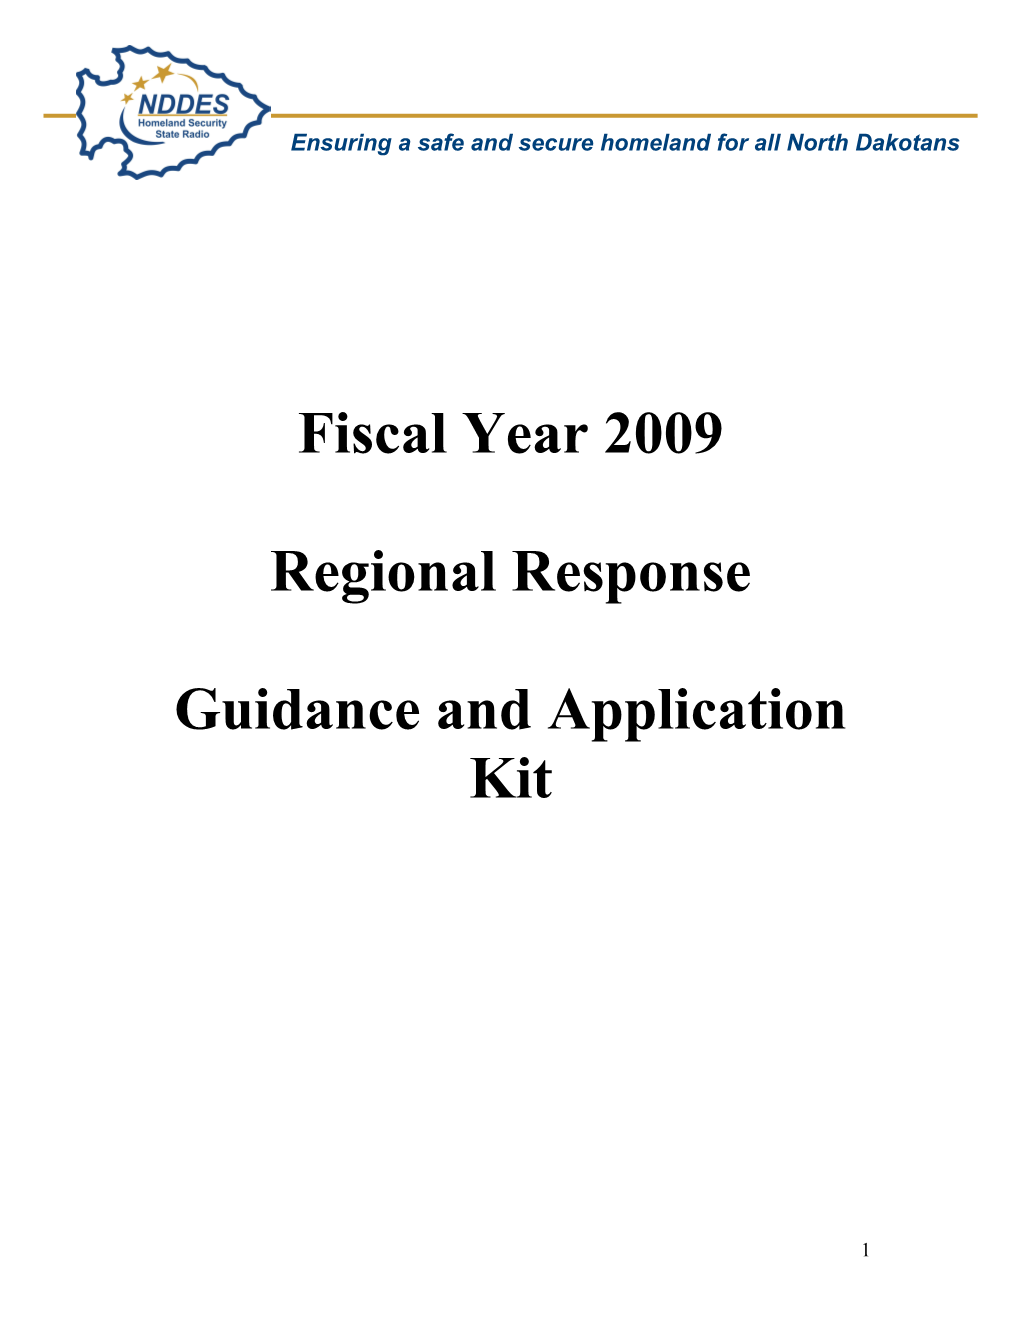 Regional Response Sub Grant Application